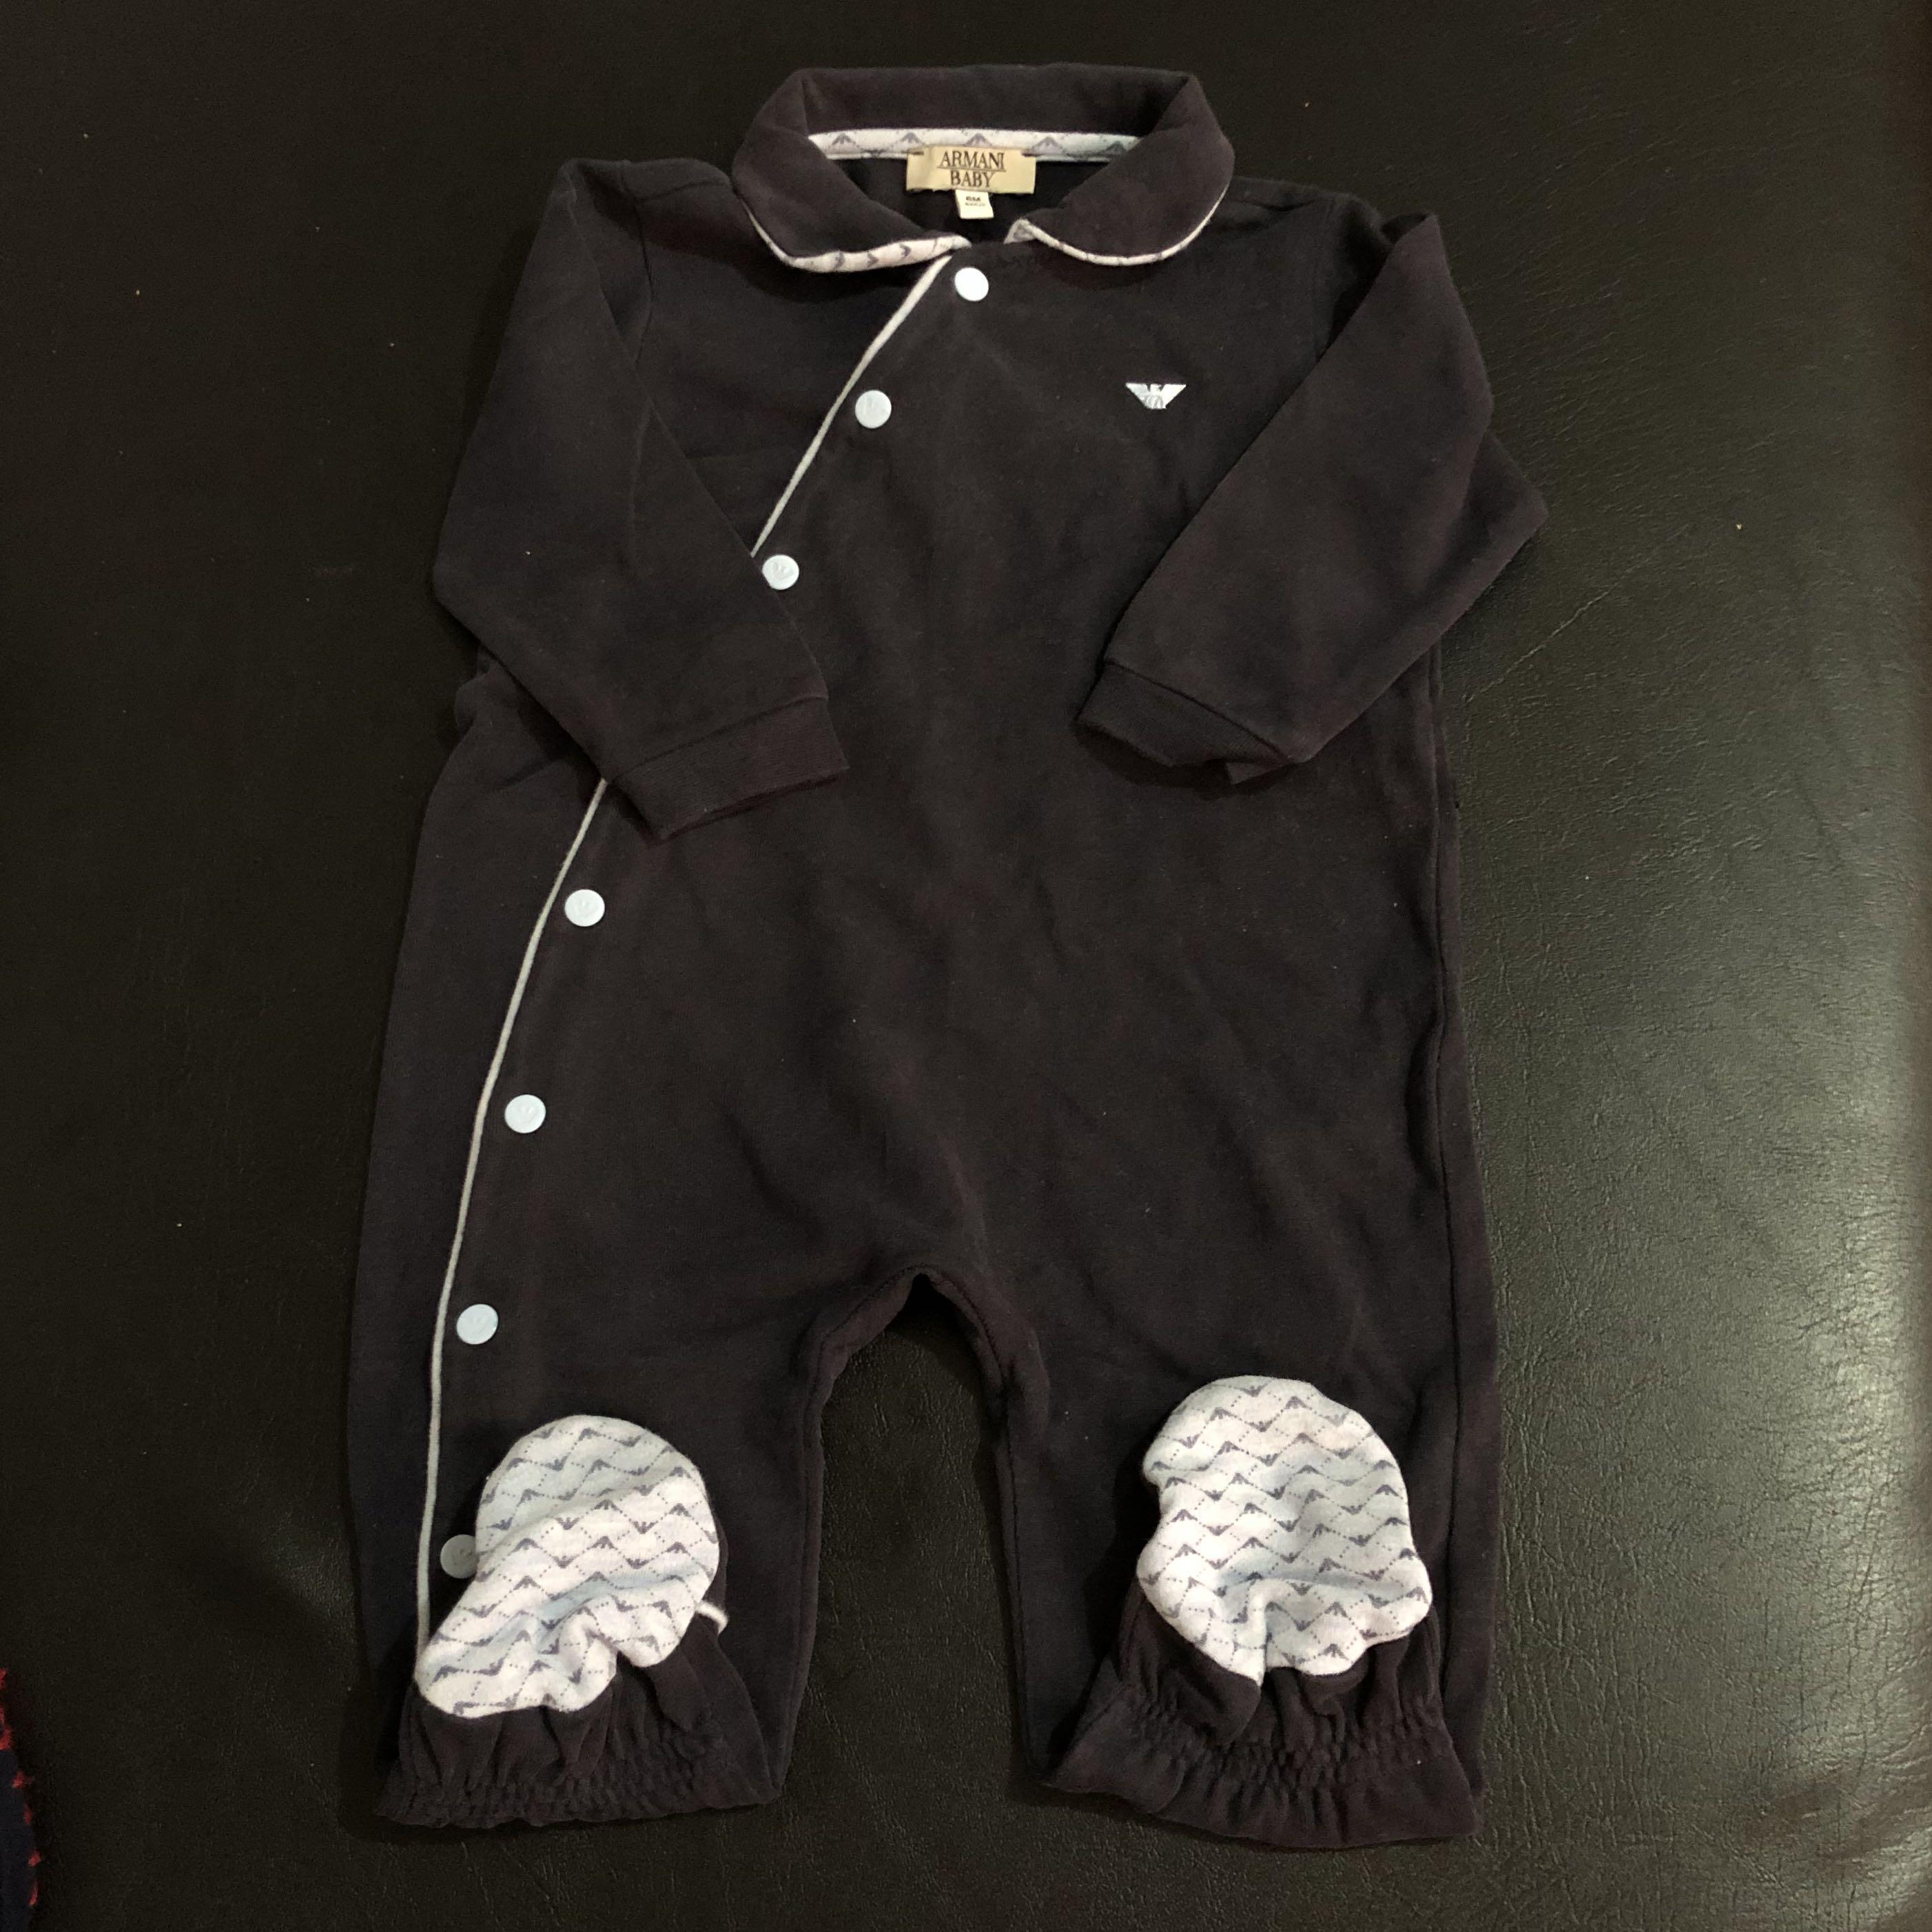 armani newborn clothes